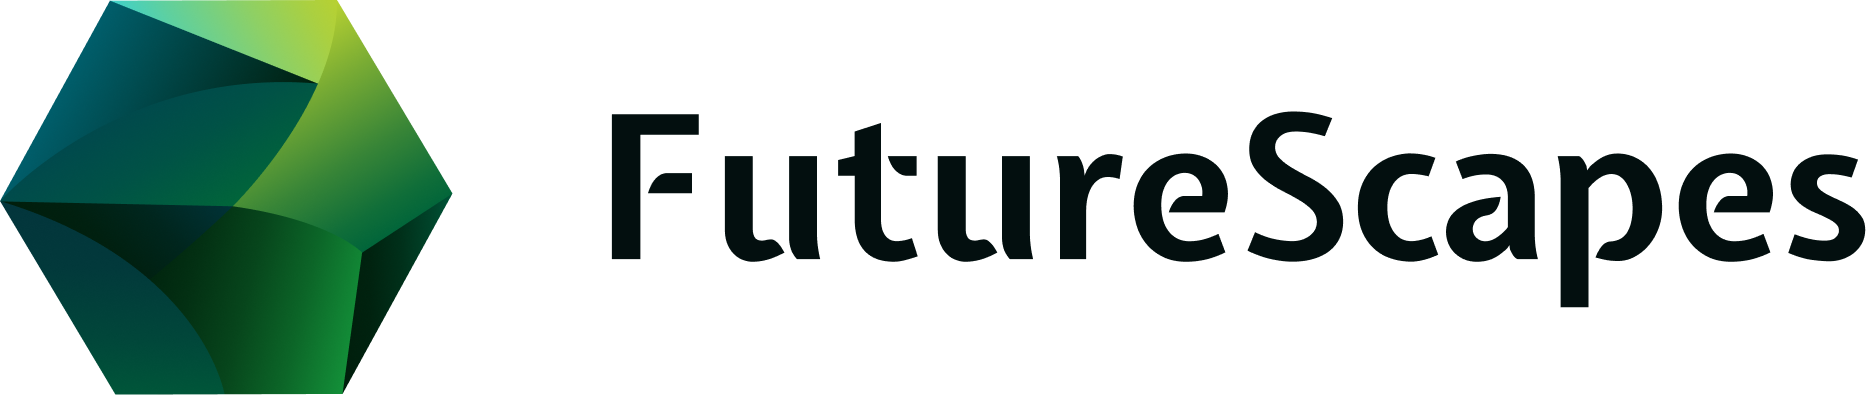 FutureScapes